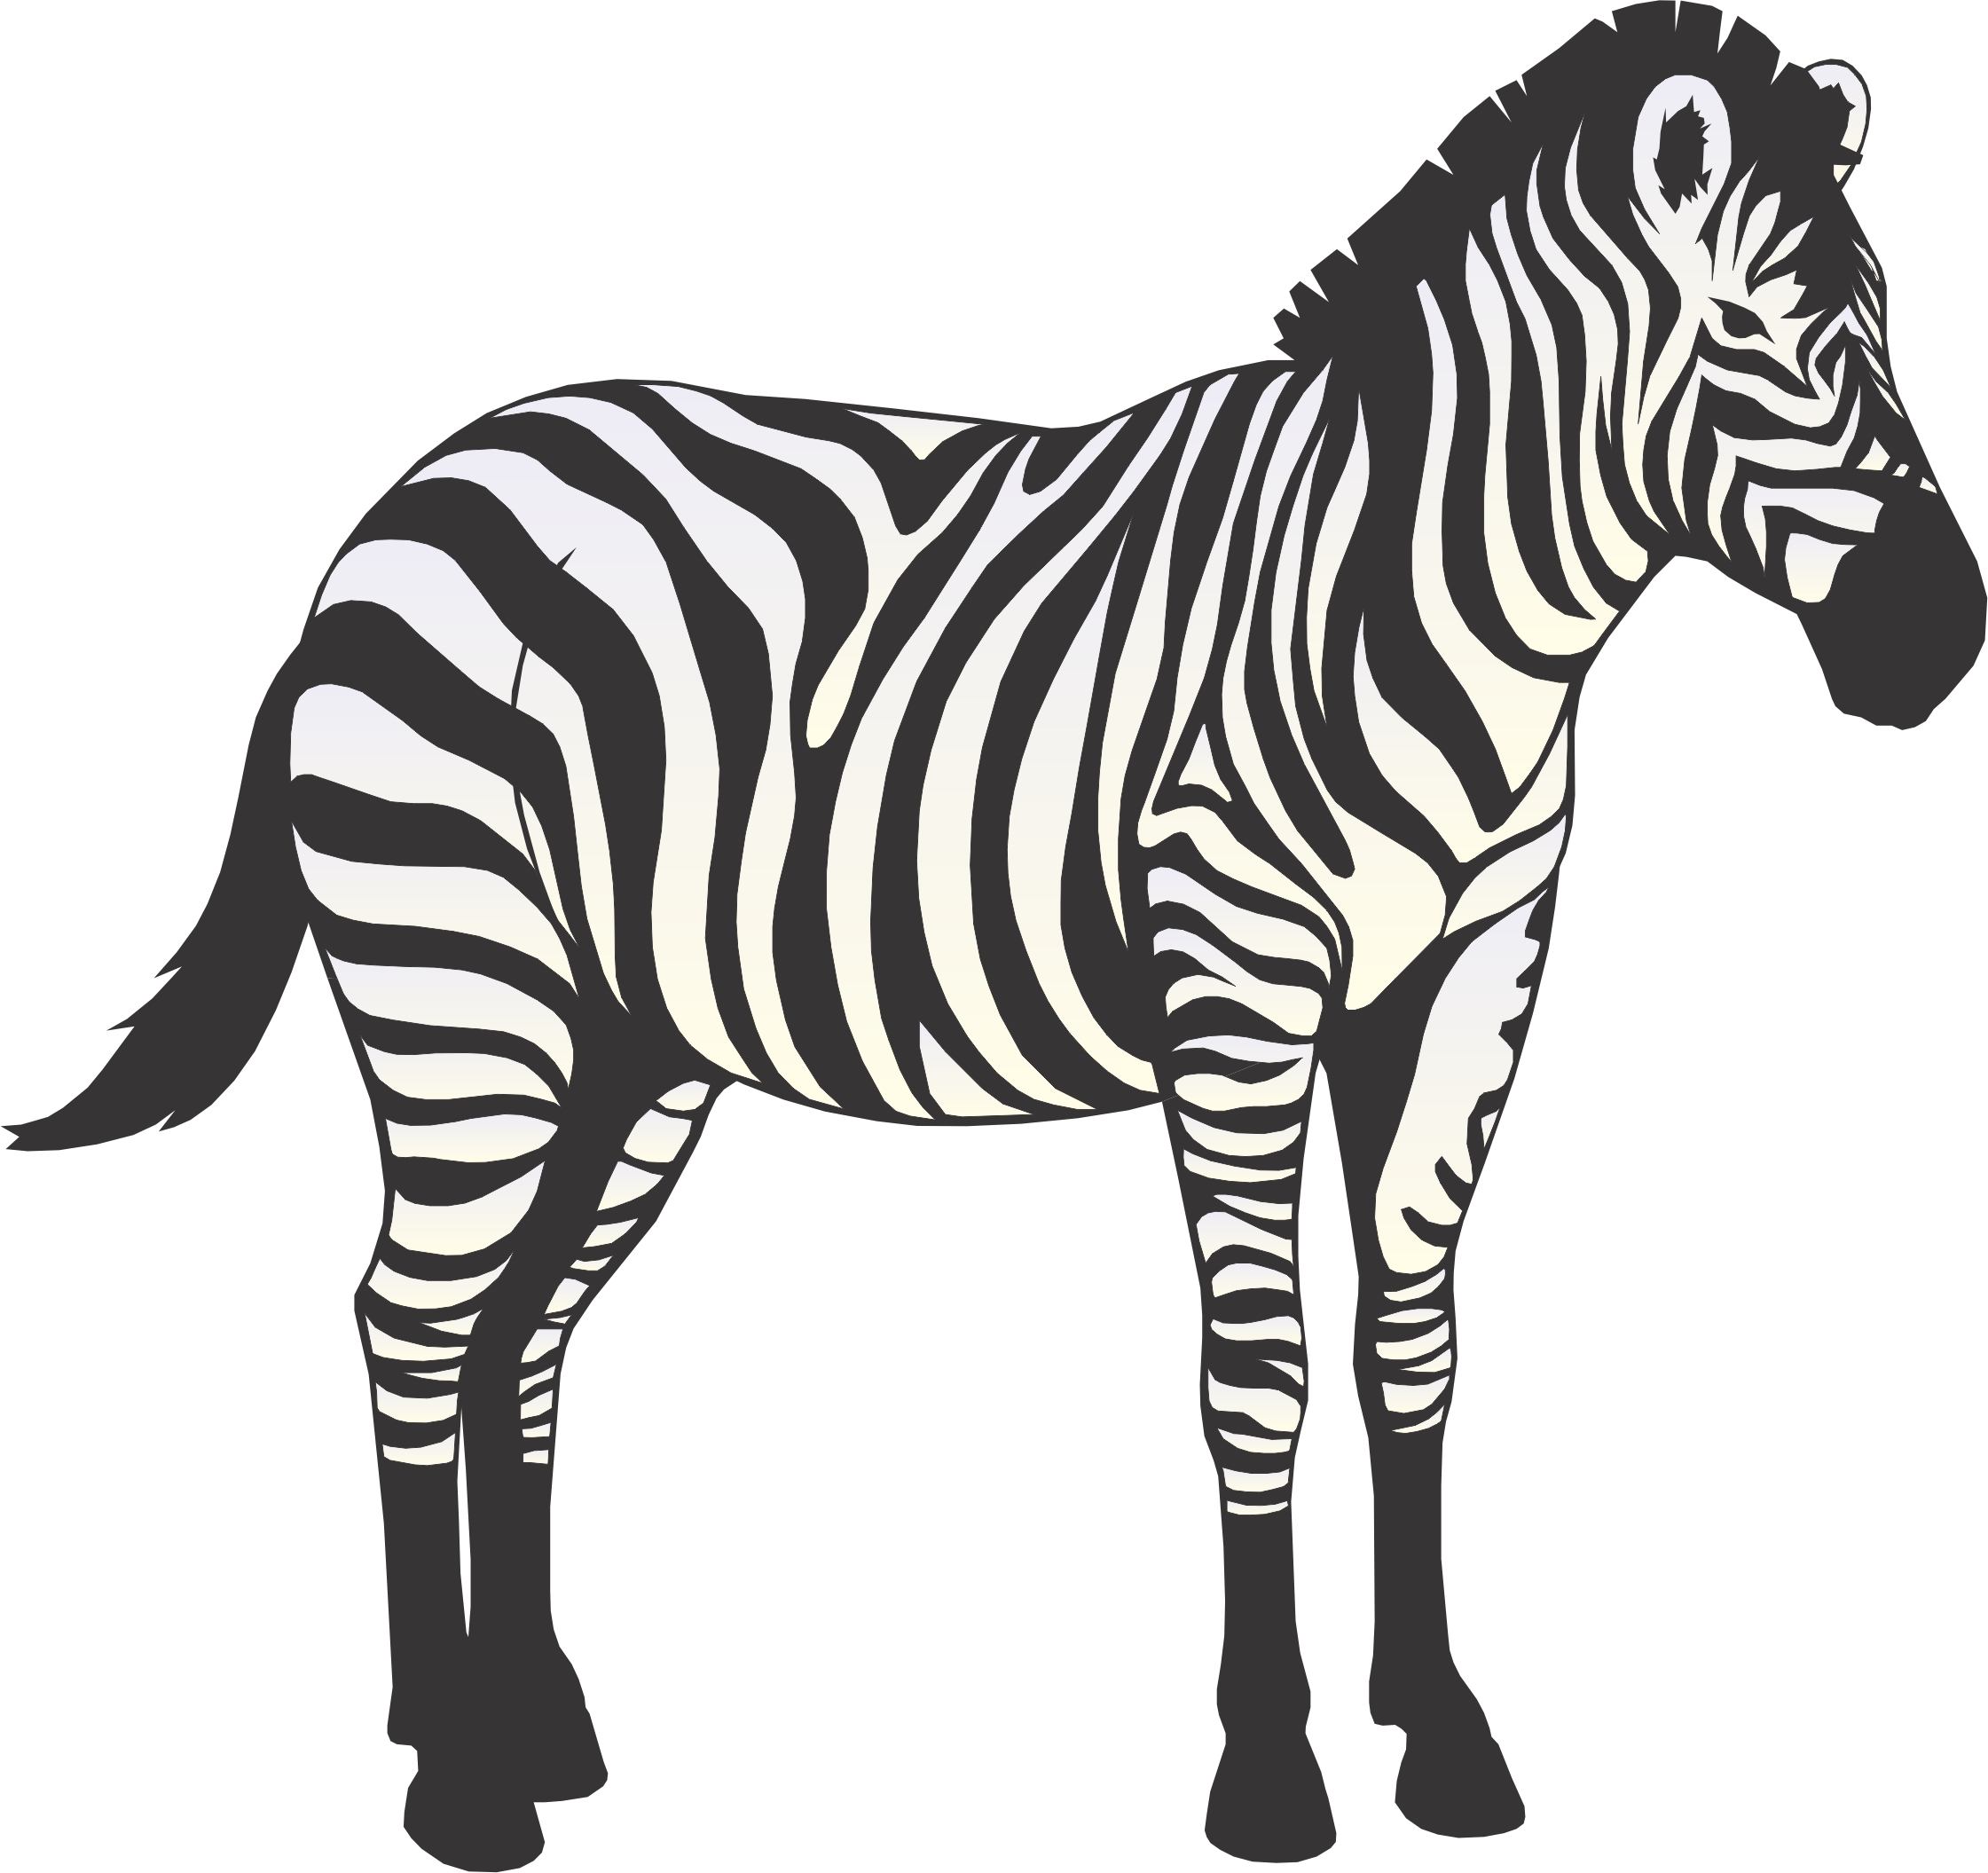 Zebra Cartoon Black And White - Gallery